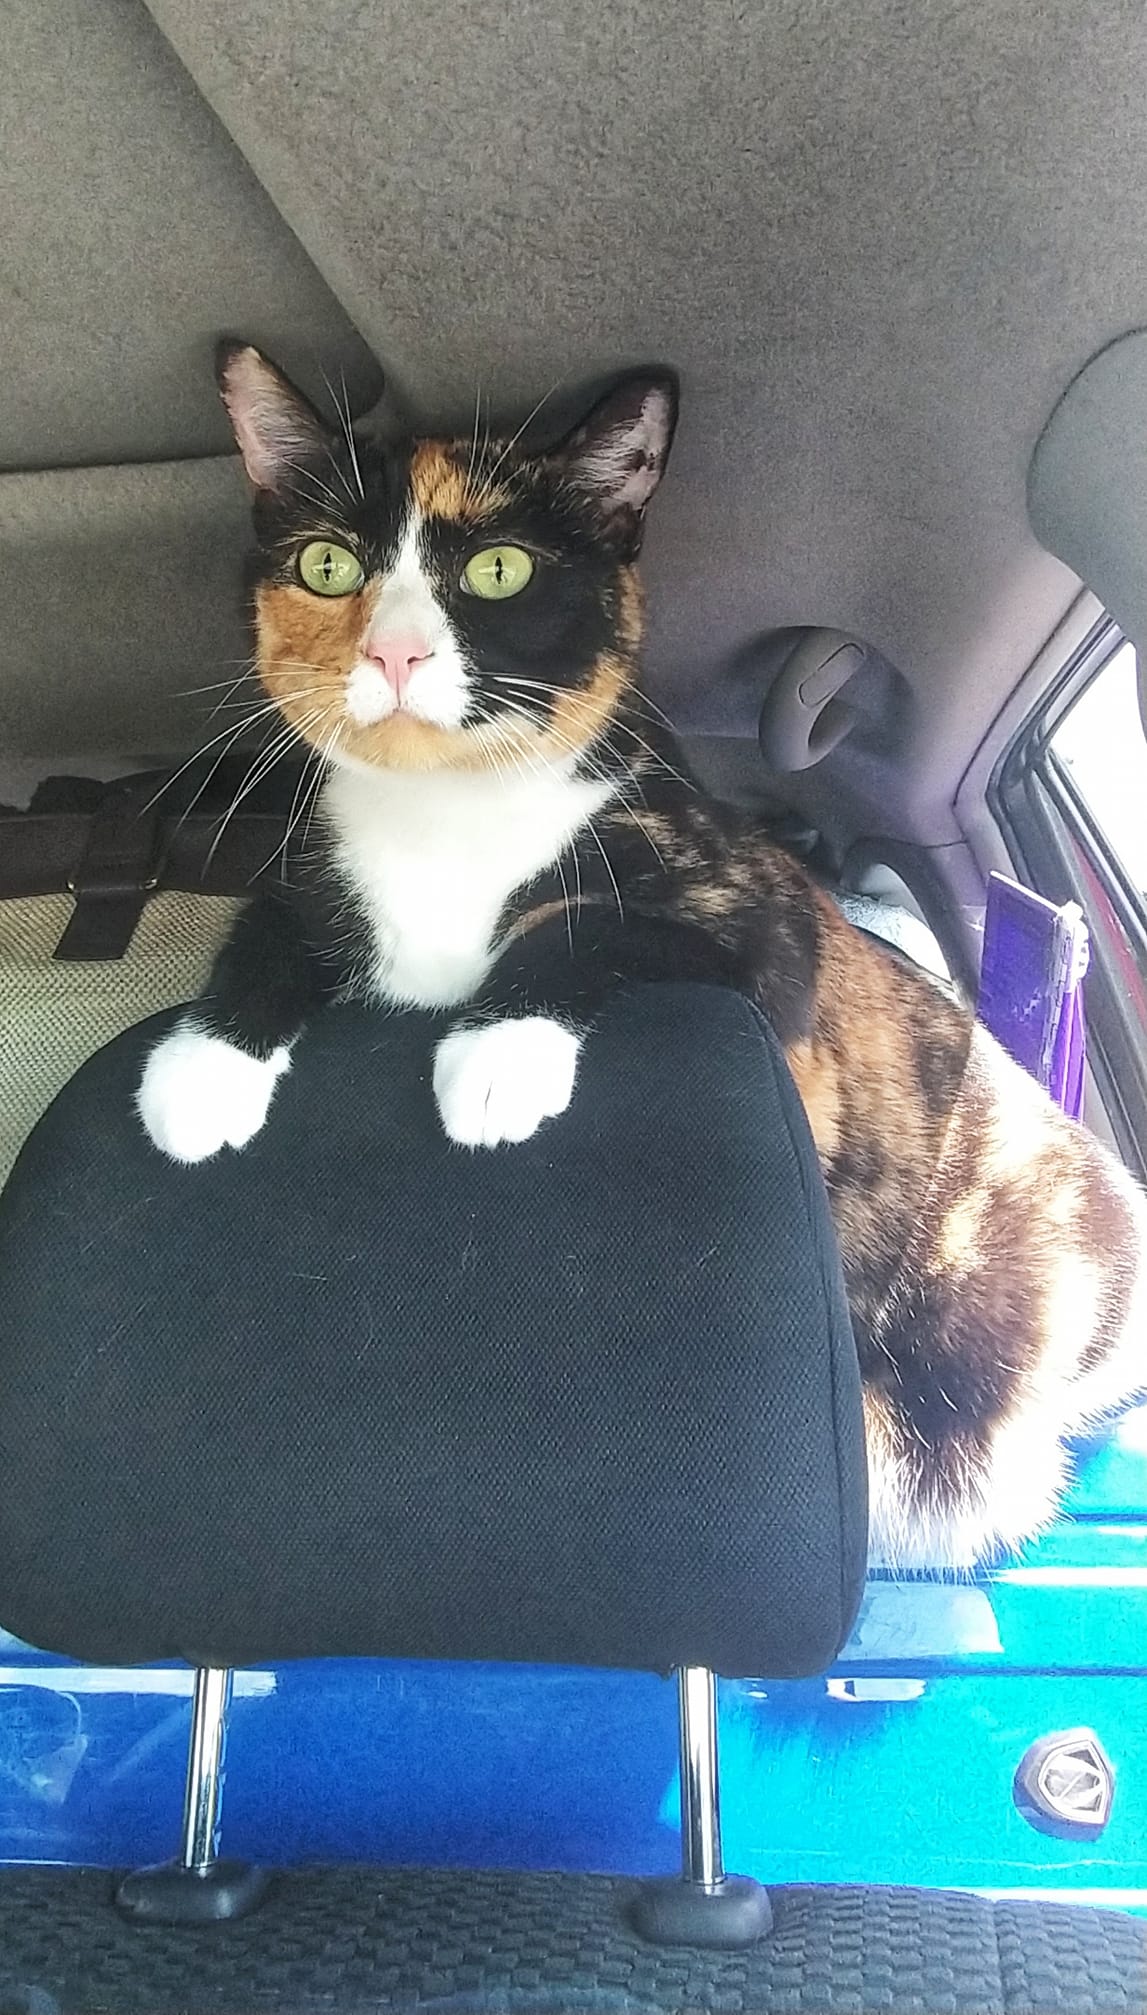 lizzi-travel-cat-road-trip-backseat.jpg